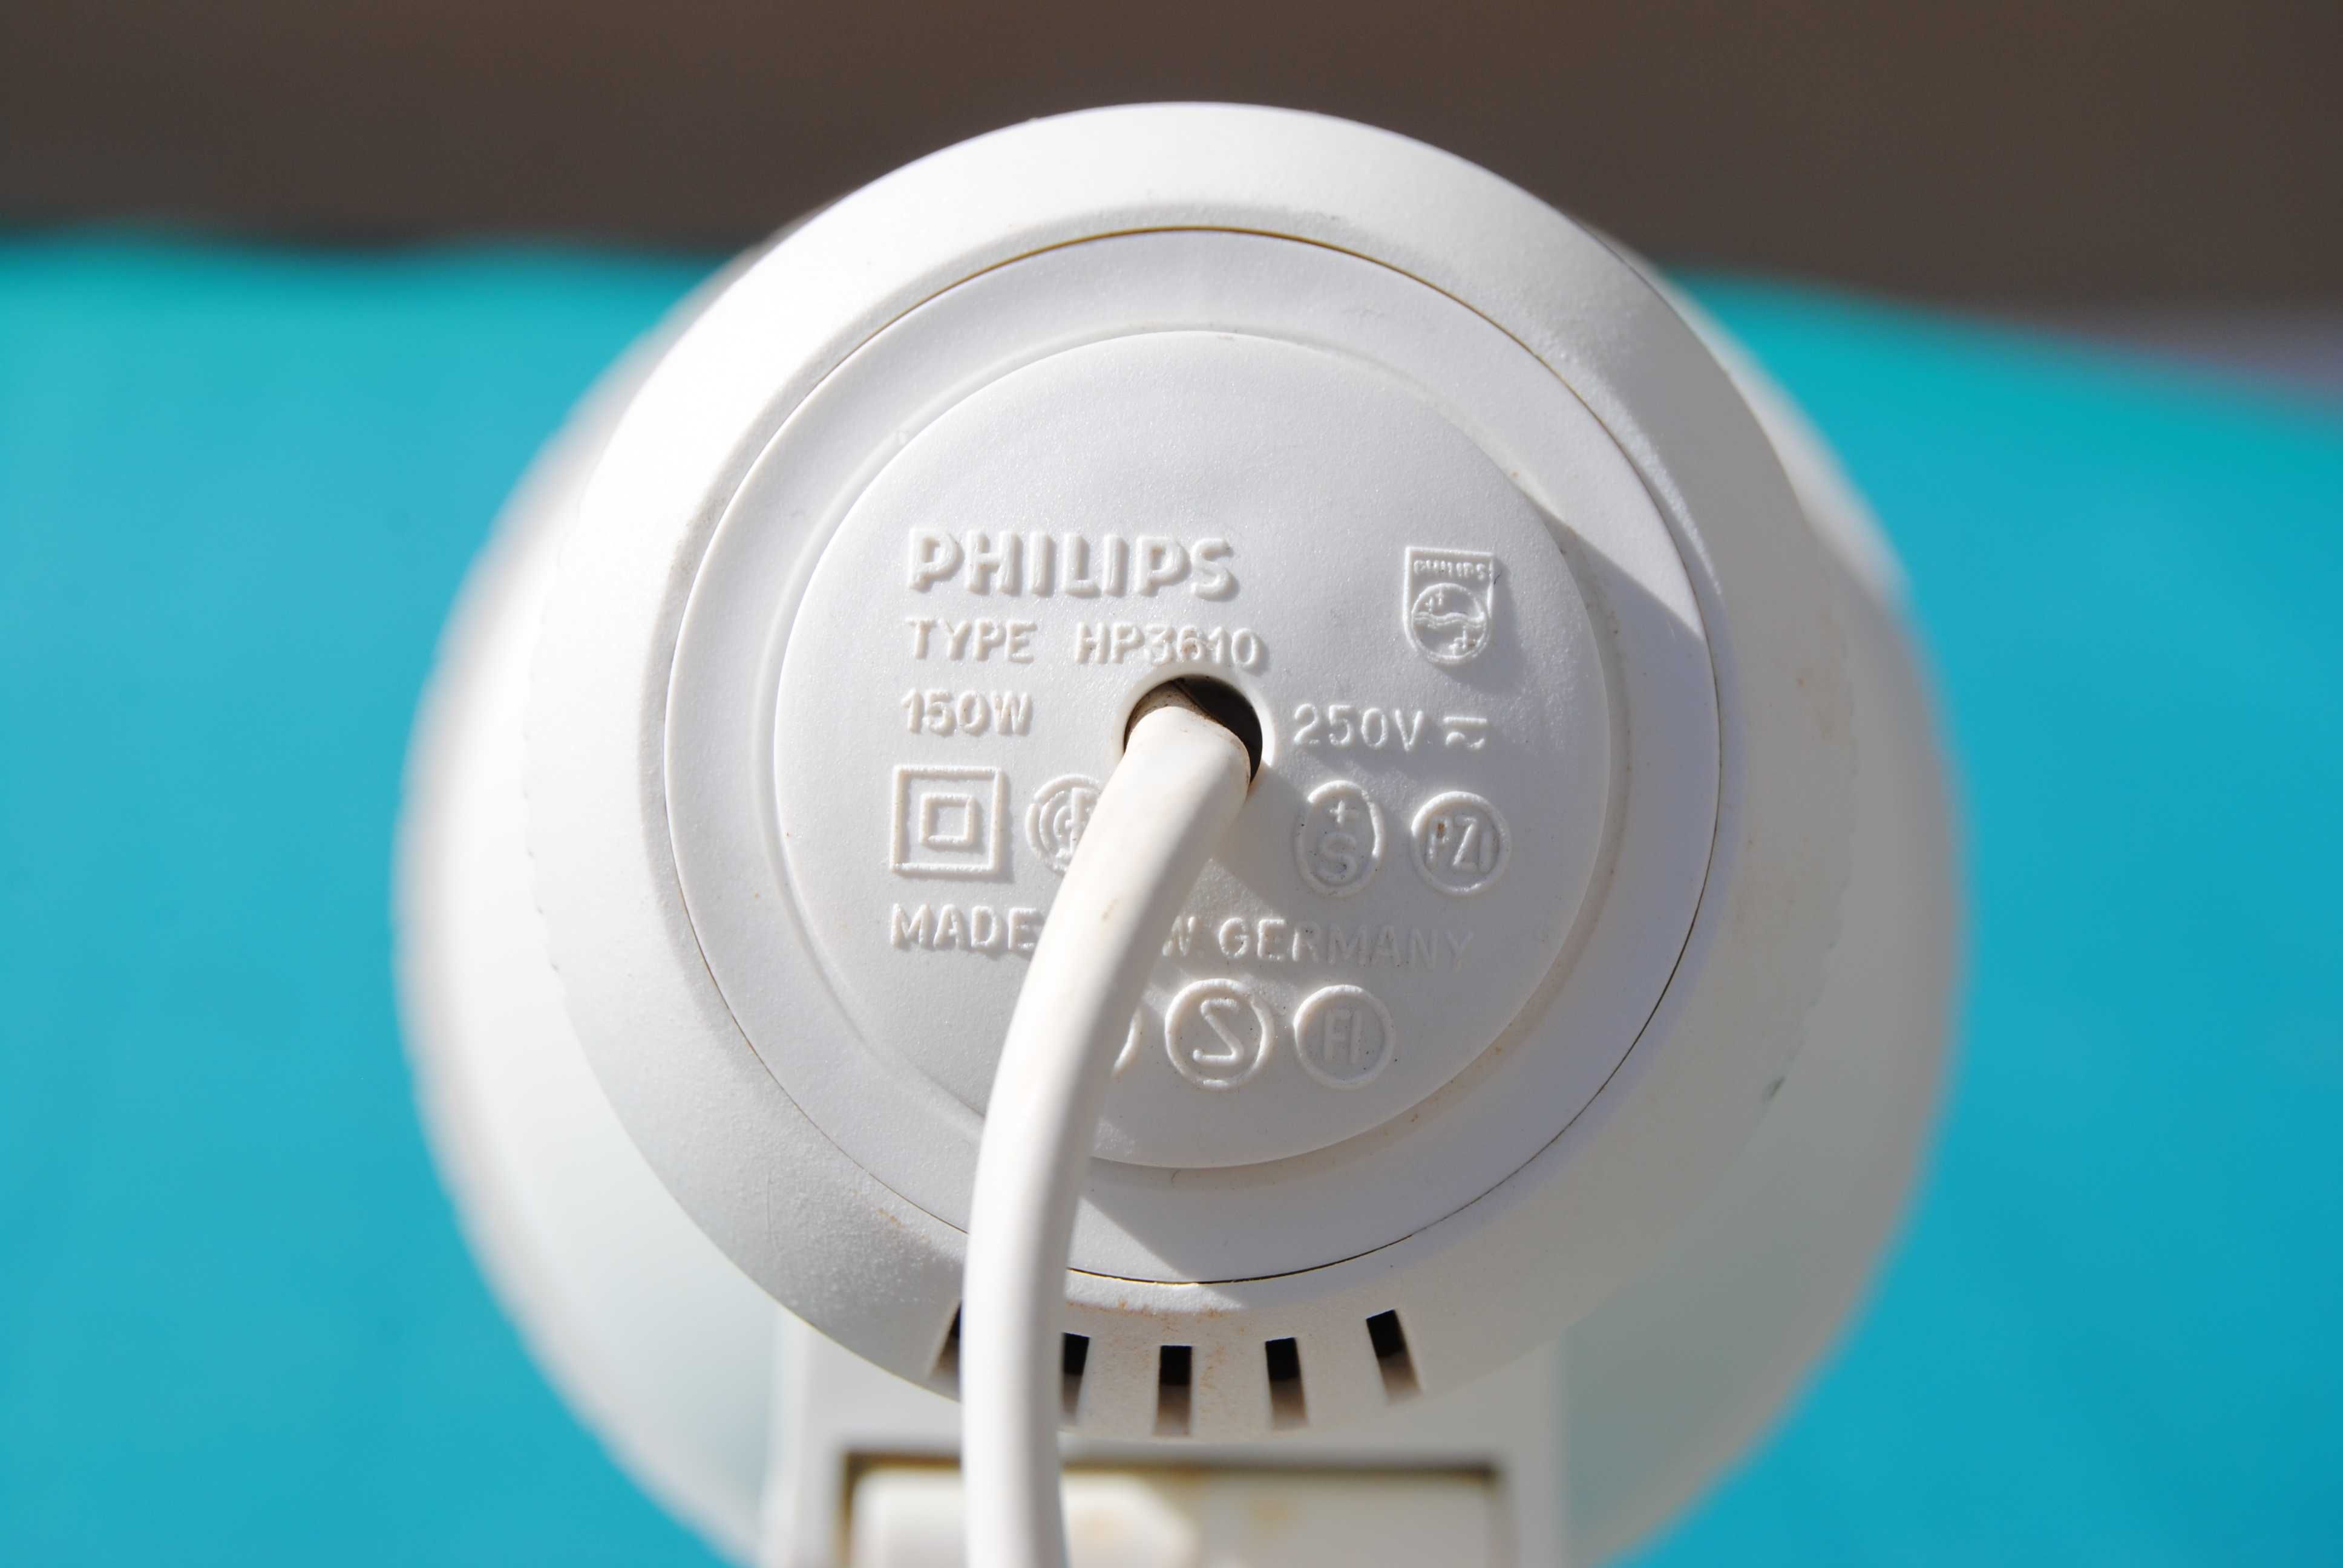 Candeeiro Philips HP 3610 lâmpada Infrared terapia Vintage